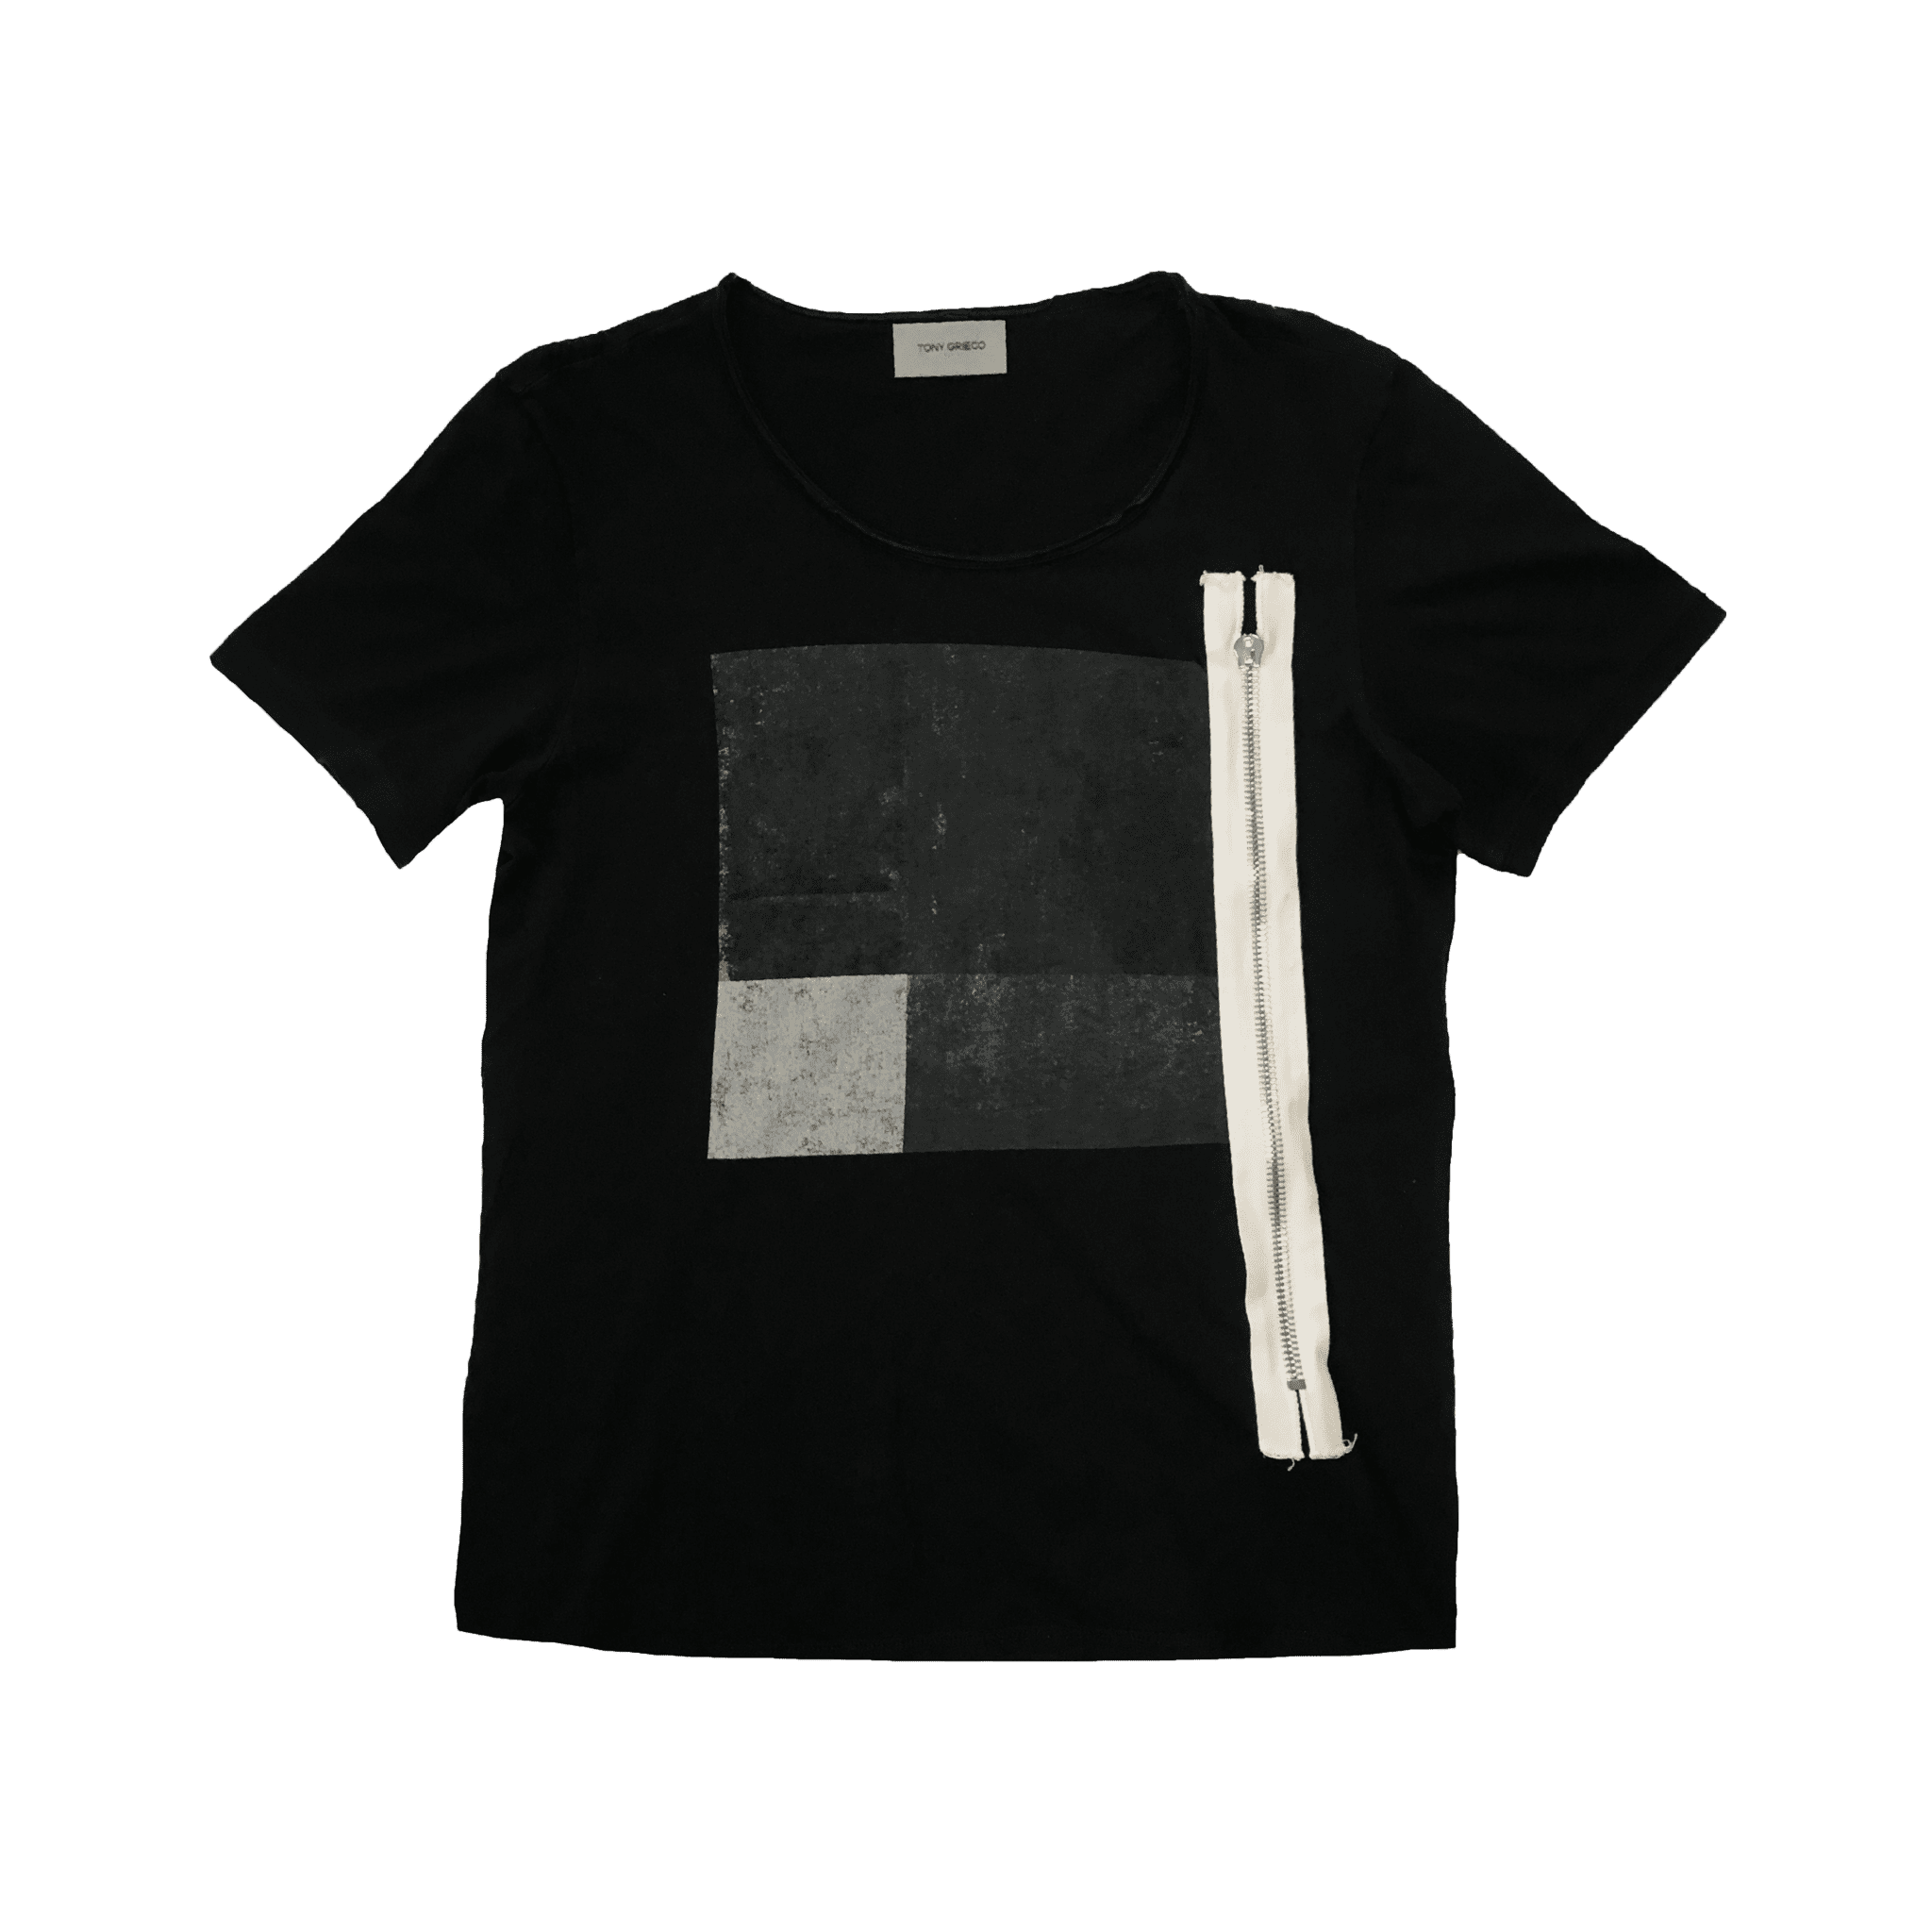 Square Black & White T-Shirt